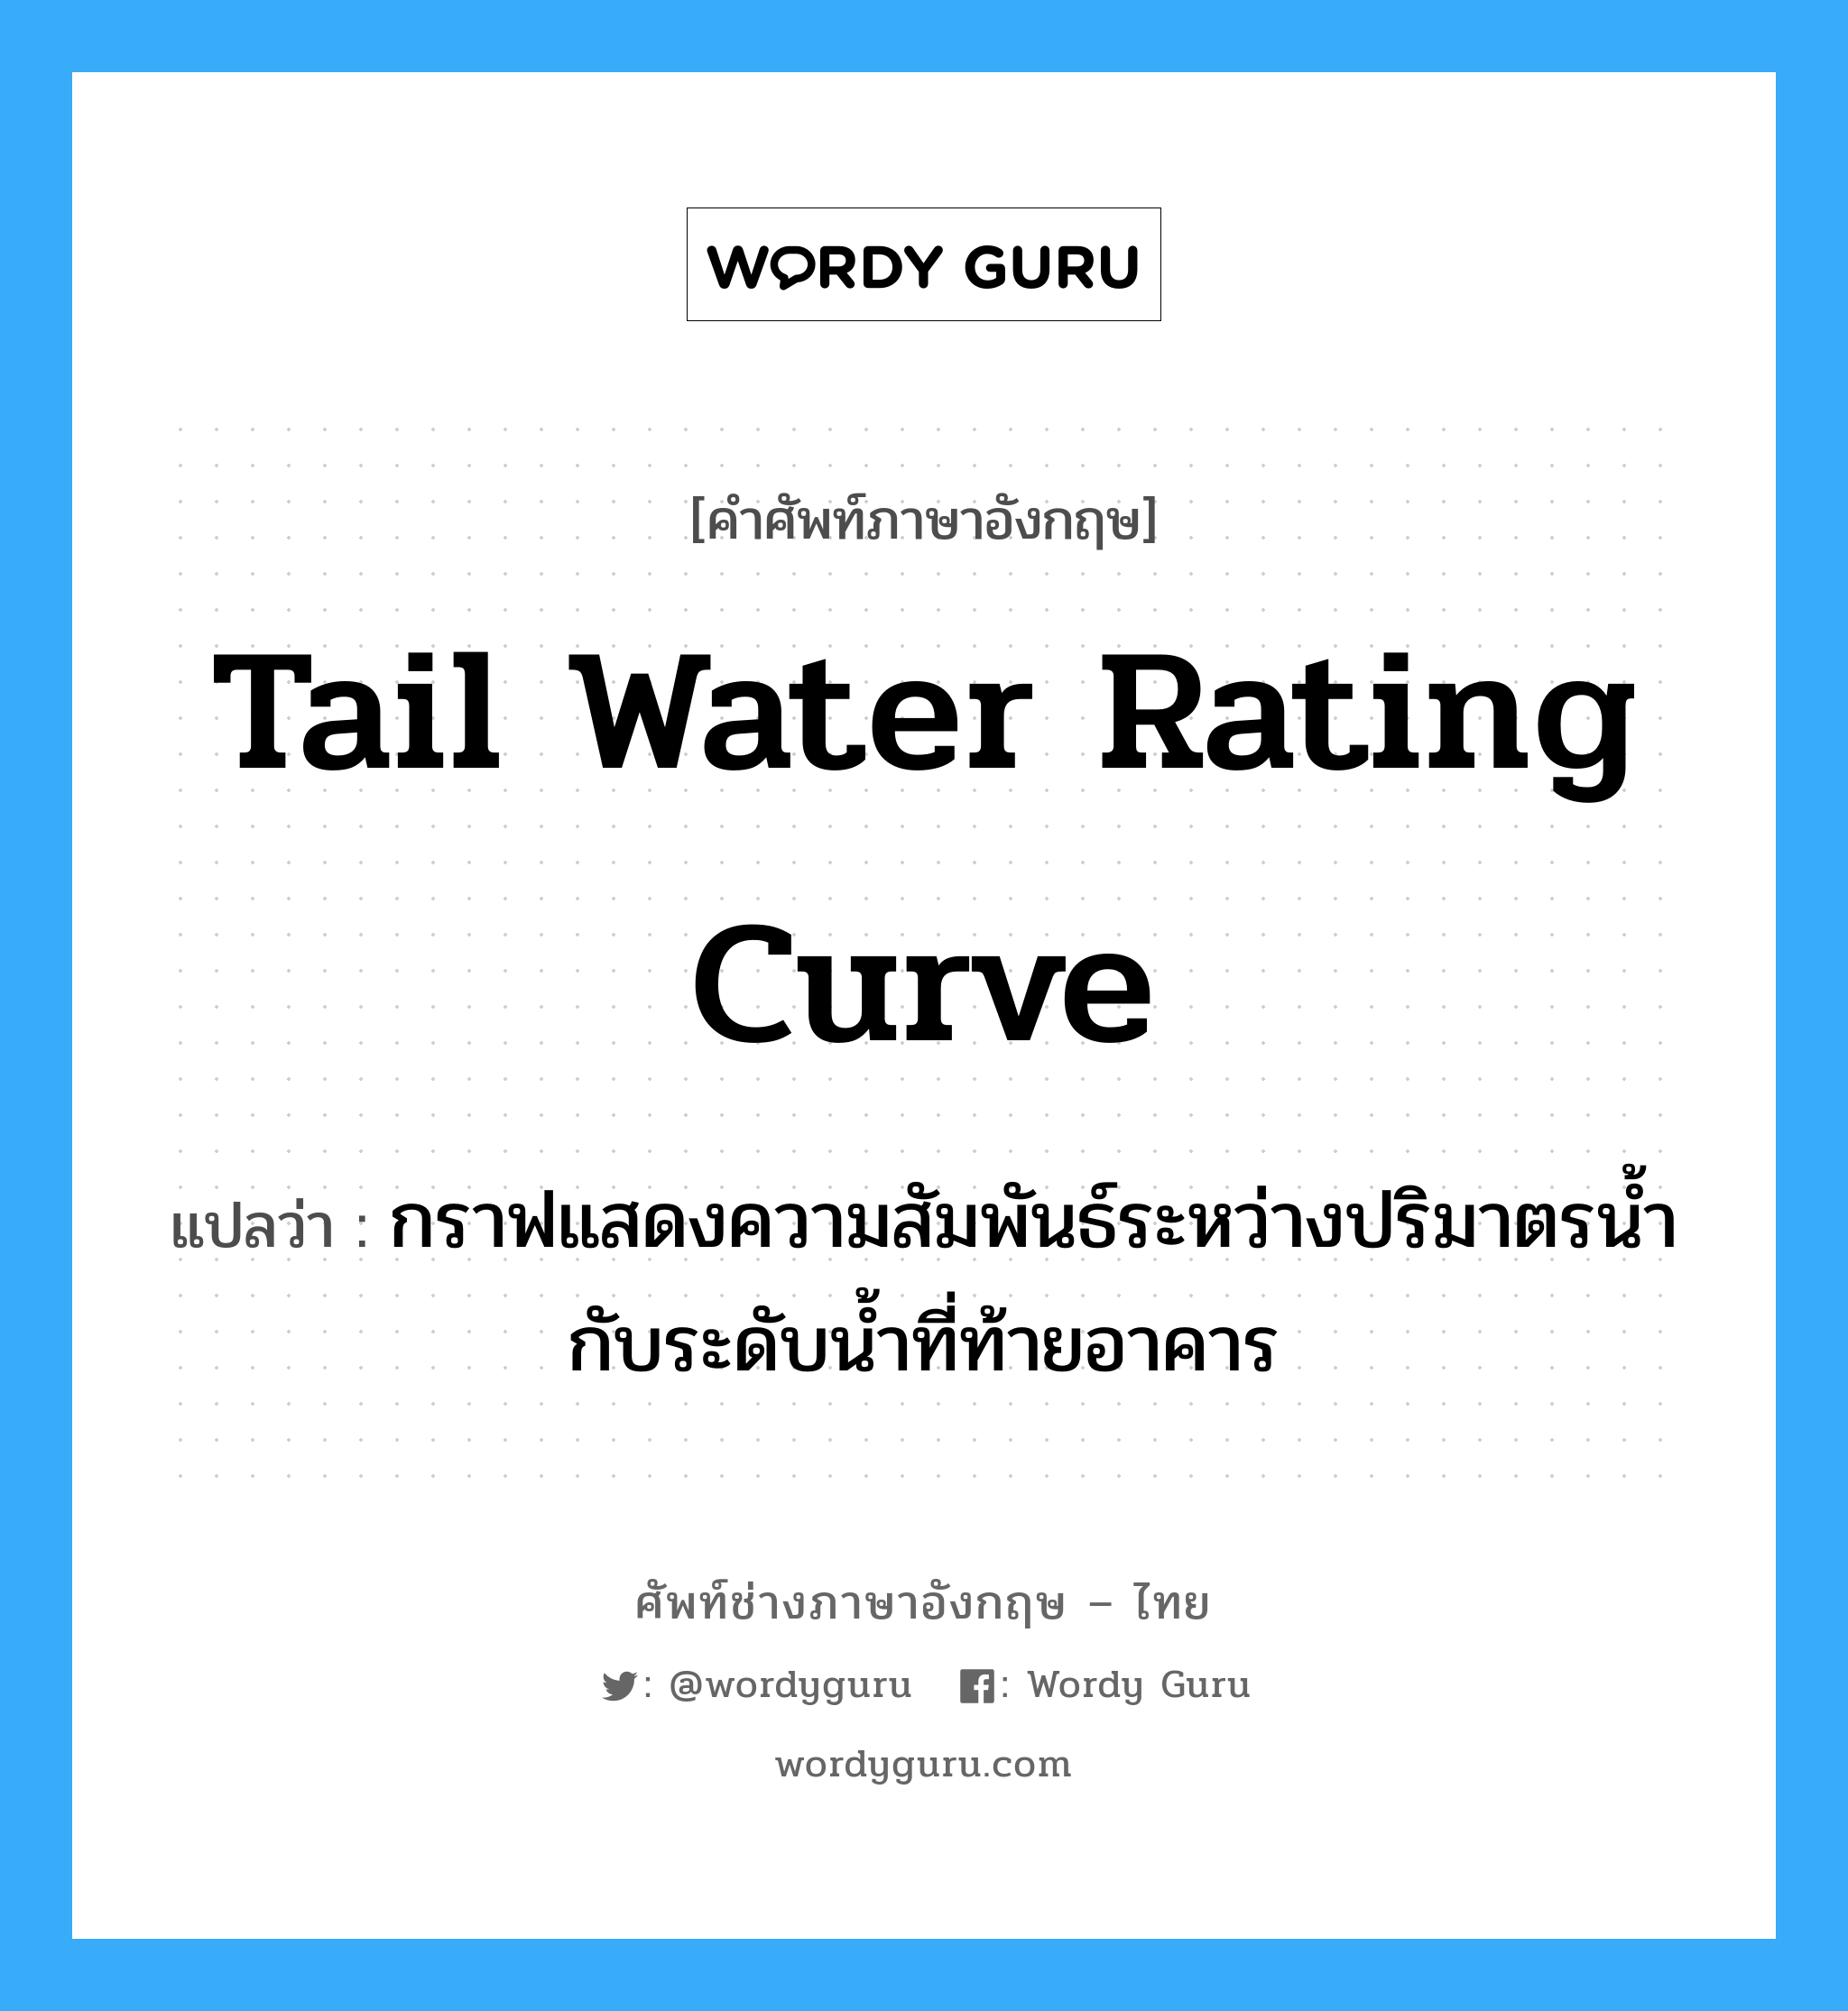 tail water rating curve แปลว่า?, คำศัพท์ช่างภาษาอังกฤษ - ไทย tail water rating curve คำศัพท์ภาษาอังกฤษ tail water rating curve แปลว่า กราฟแสดงความสัมพันธ์ระหว่างปริมาตรน้ำกับระดับน้ำที่ท้ายอาคาร